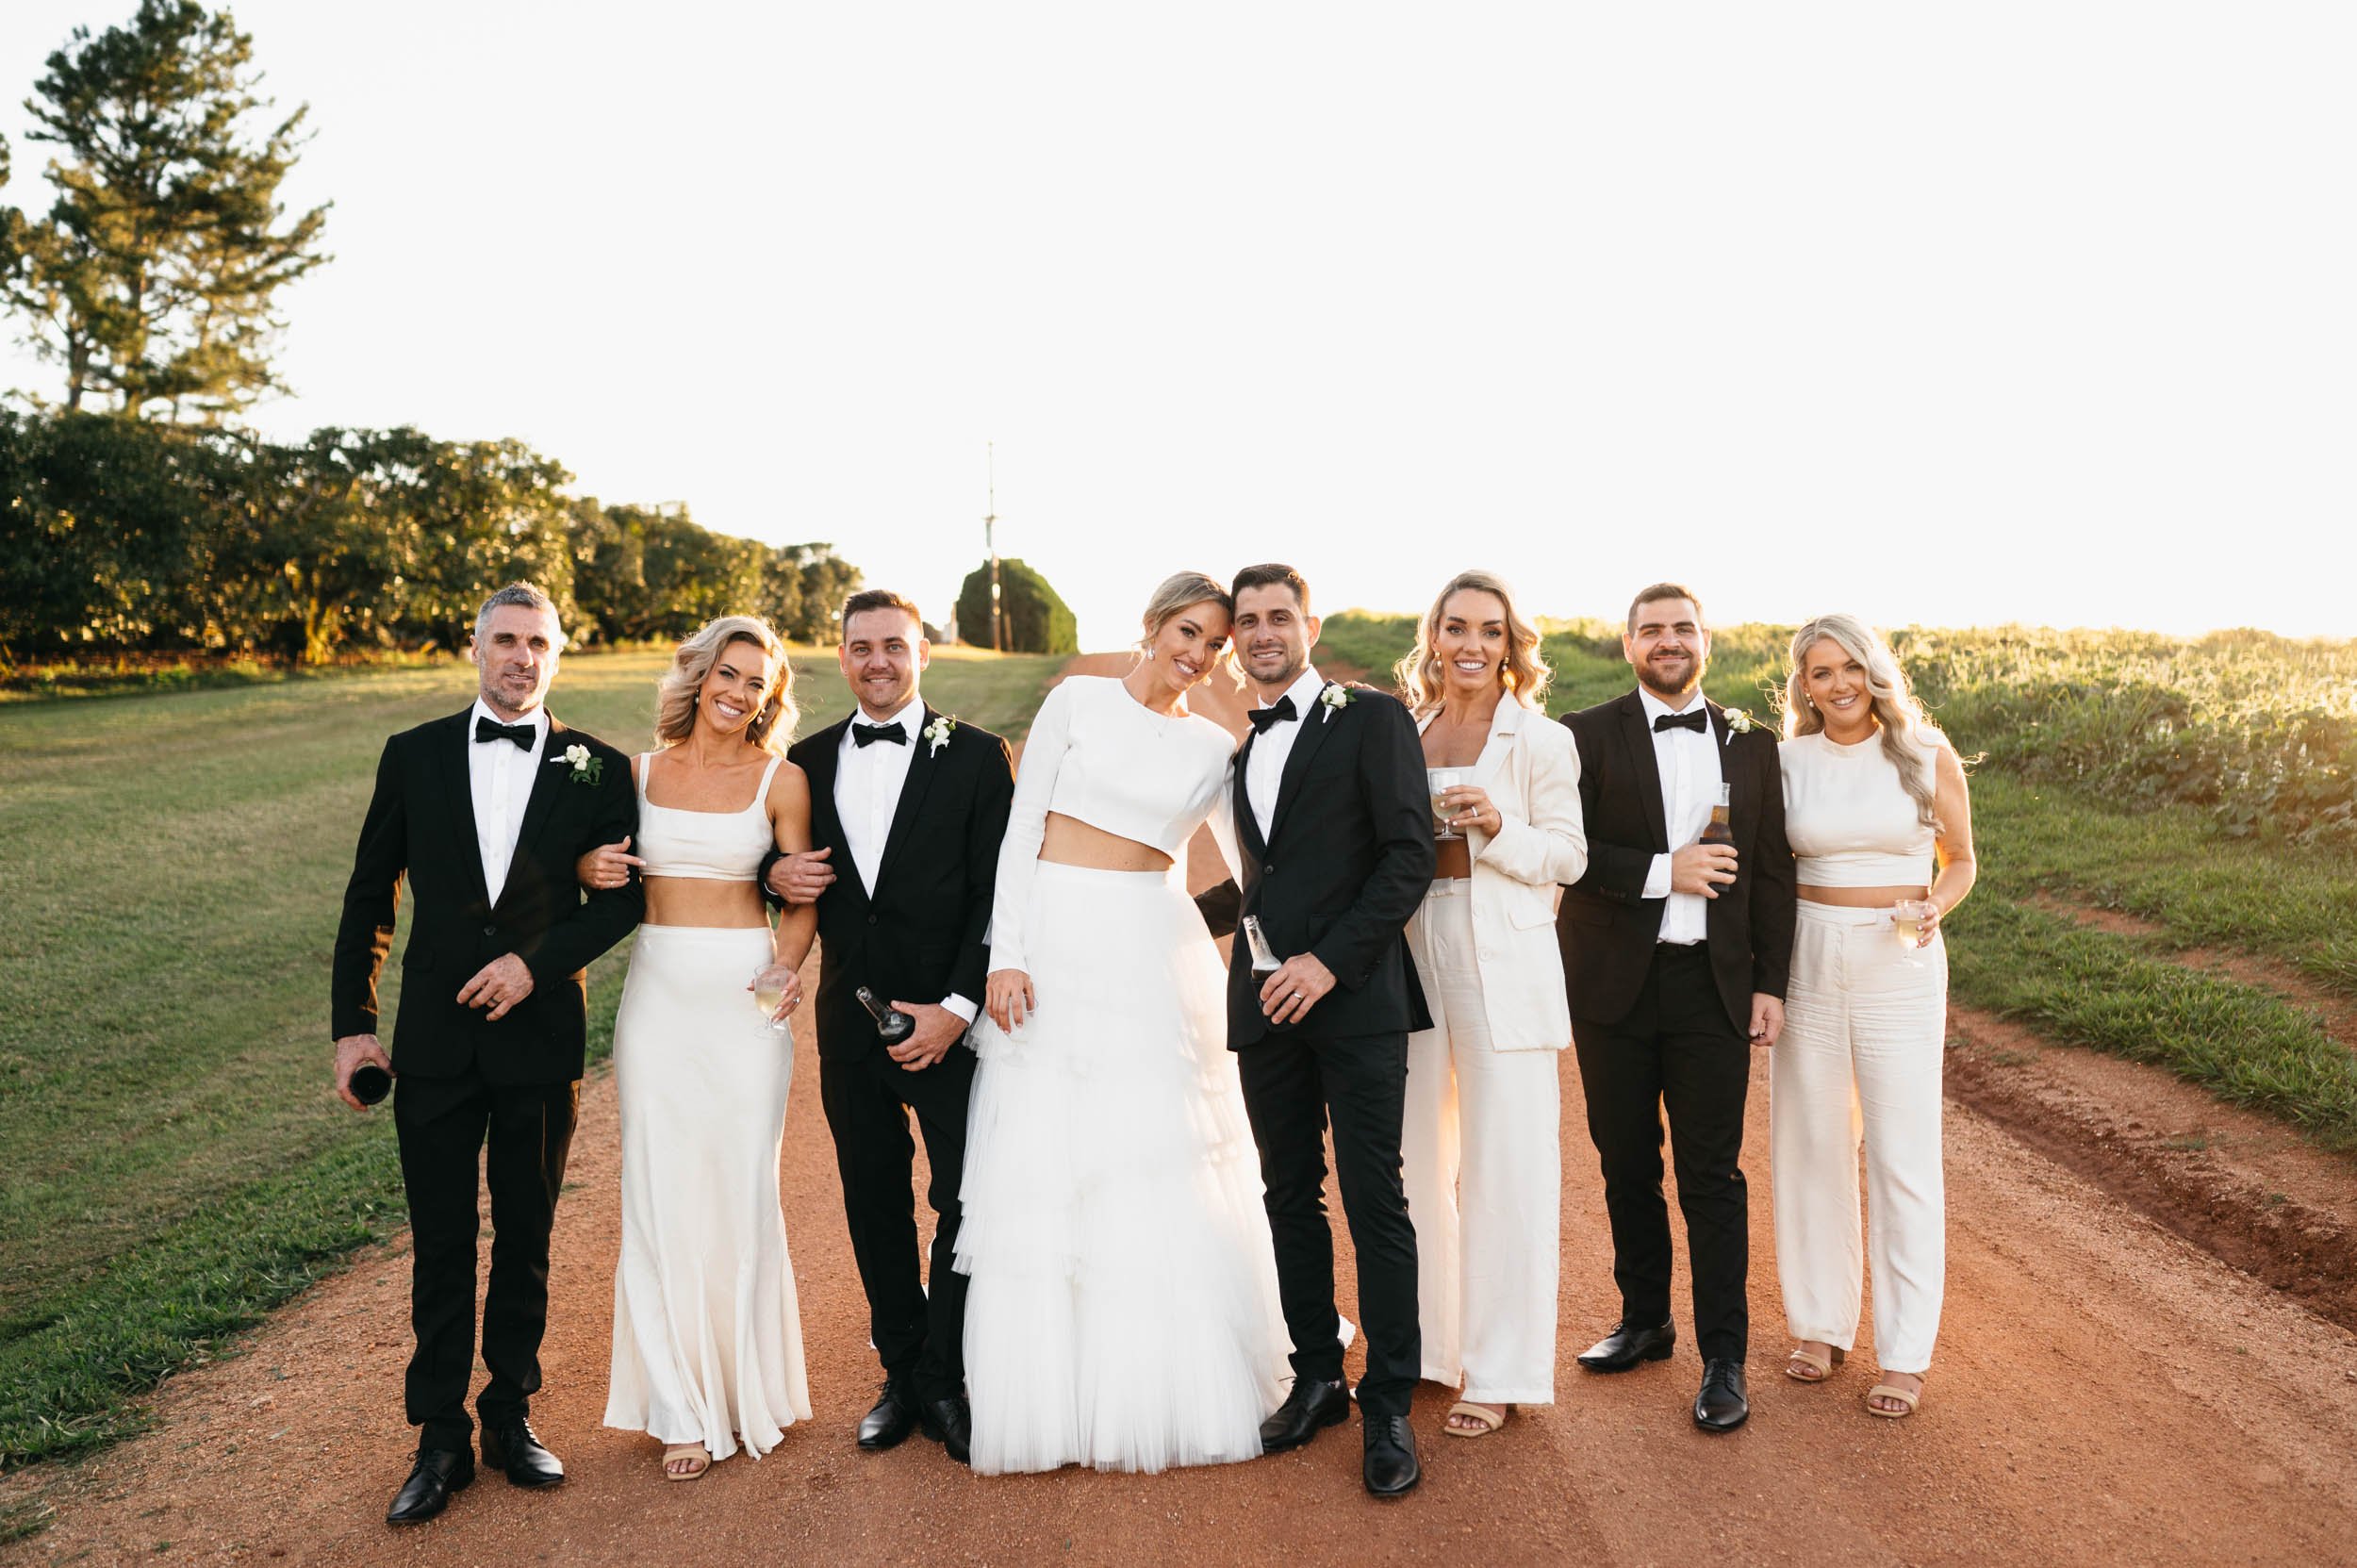 The Raw Photographer - Cairns Wedding Photographer - Mareeba Tablelands - Queensland photography - Kyha dress - luxury-53.jpg